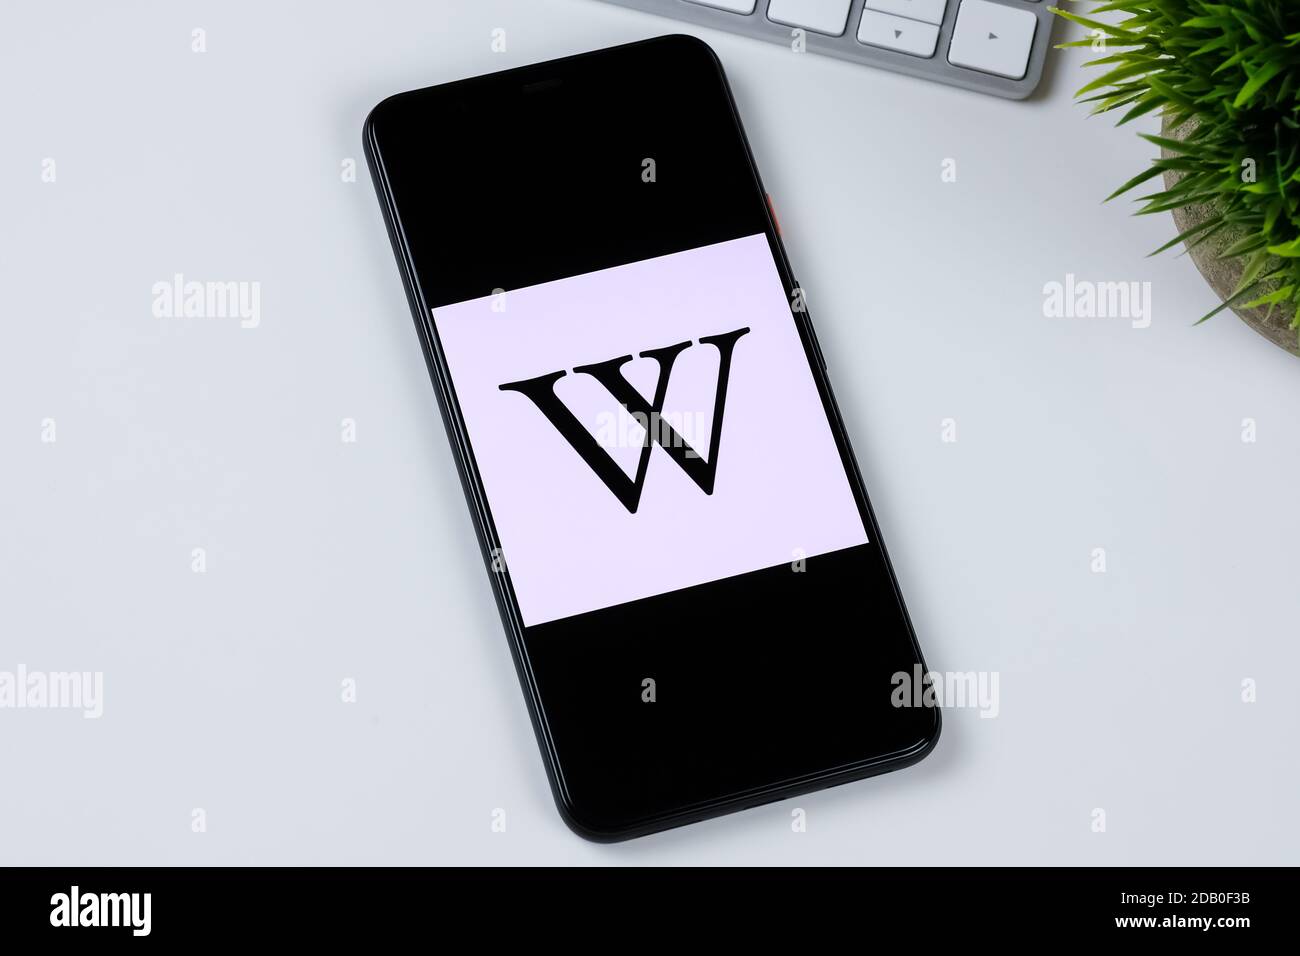 Wikipedia app logo on a smartphone screen. Stock Photo